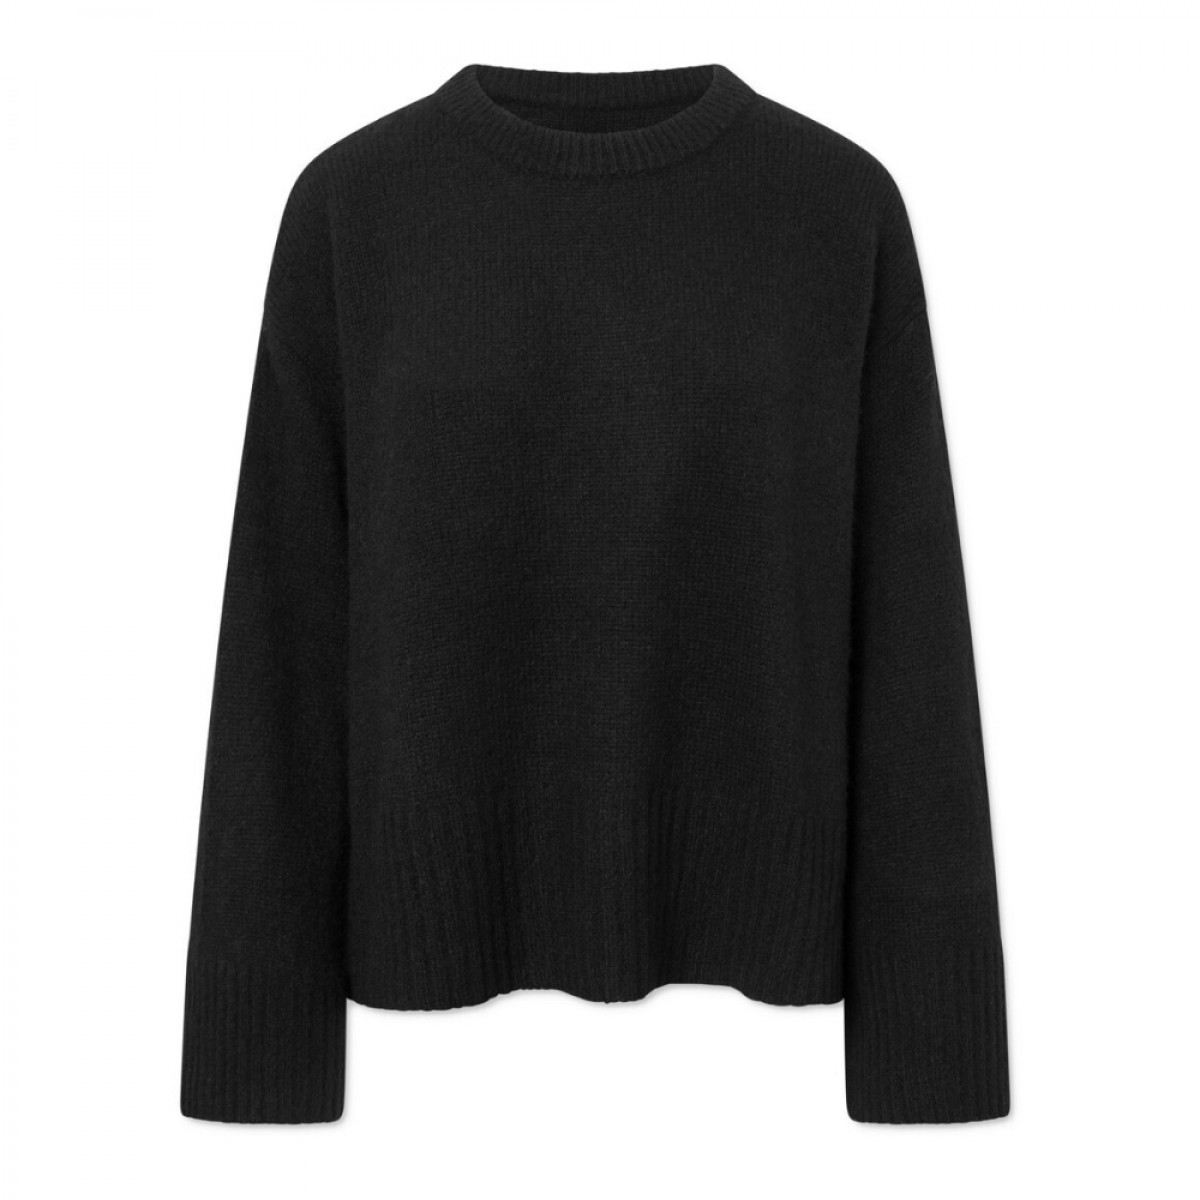 kath knit - black - front